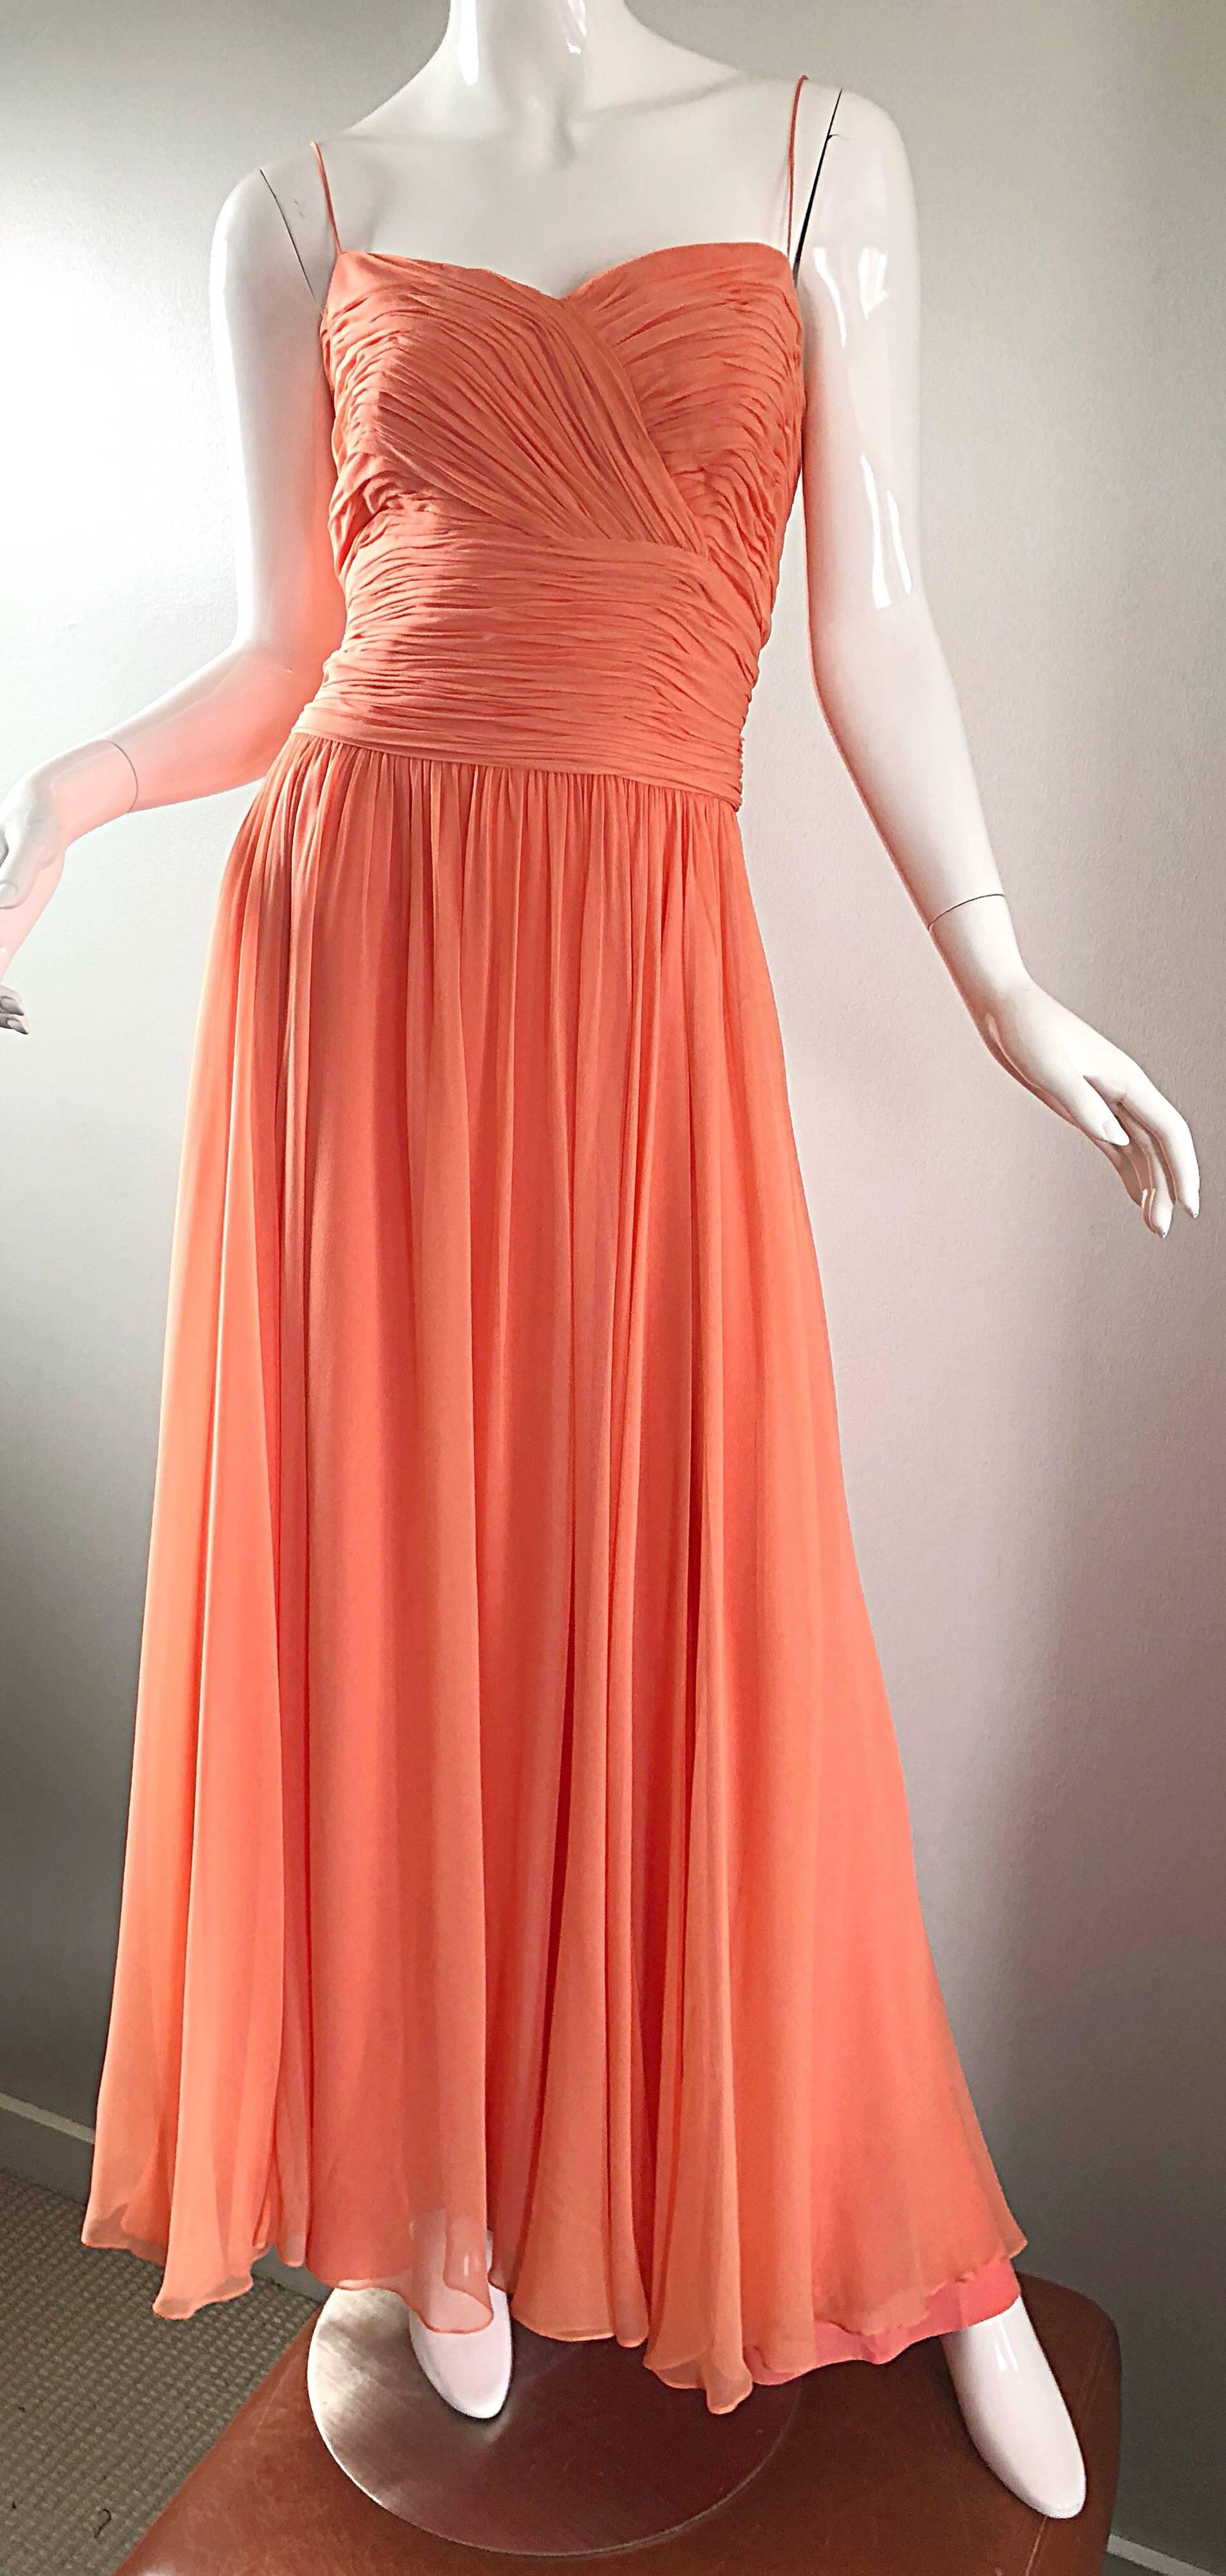 Women's Gorgeous 1950s Saks 5th Ave. Salmon / Coral Pink Silk Chiffon Vintage 50s Gown